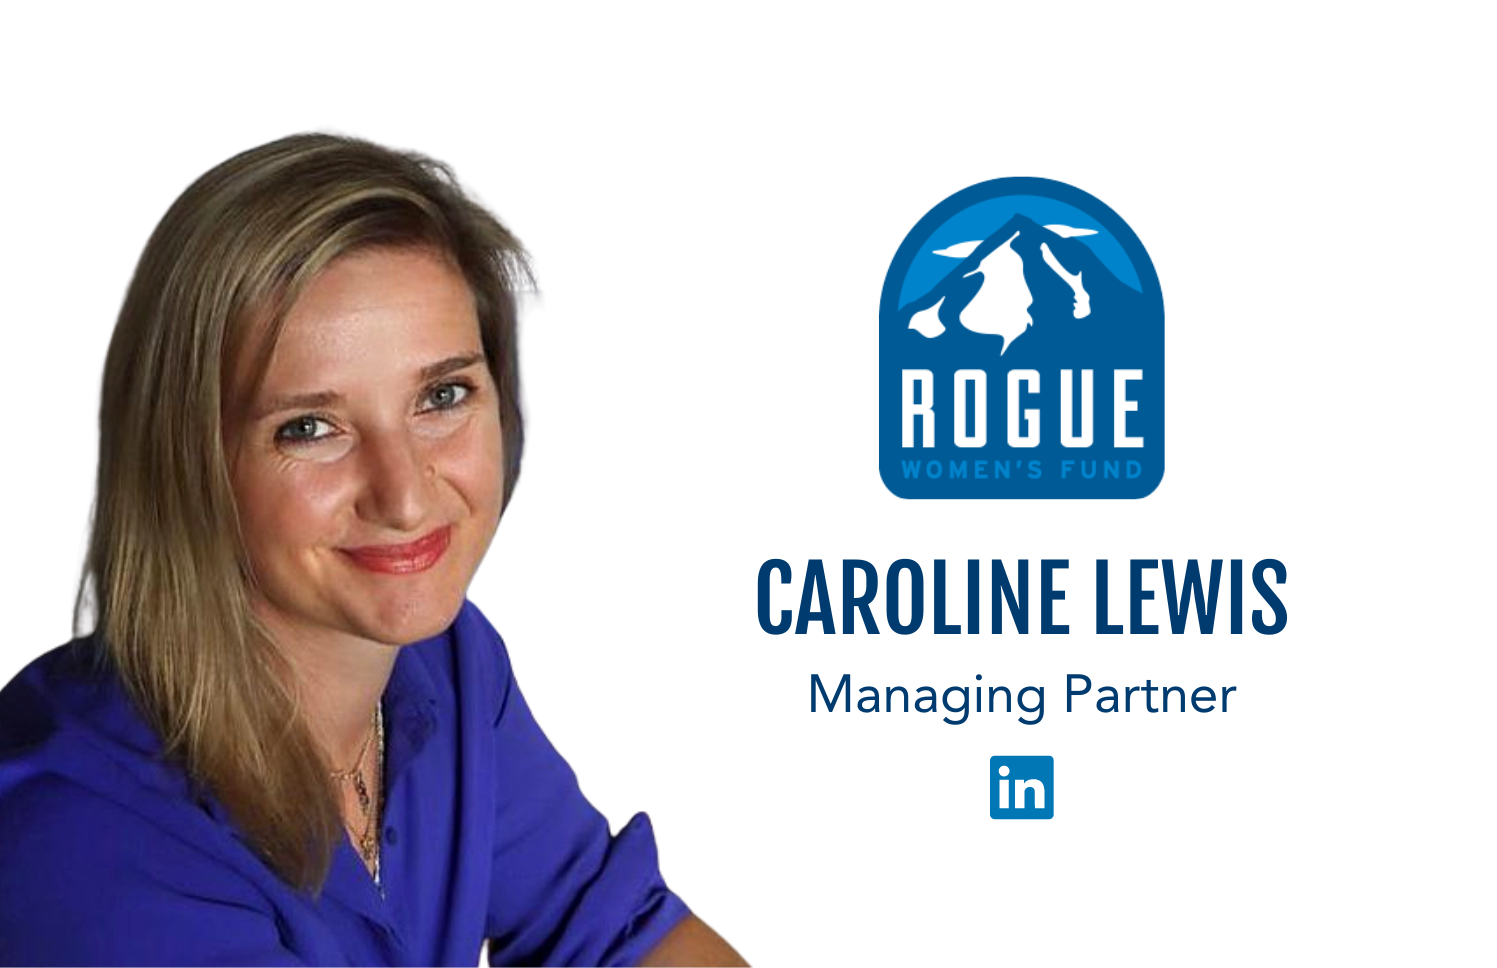 Rogue Women VI Master of Ceremony Caroline Lewis, Managing Partner at Rogue Women's Fund